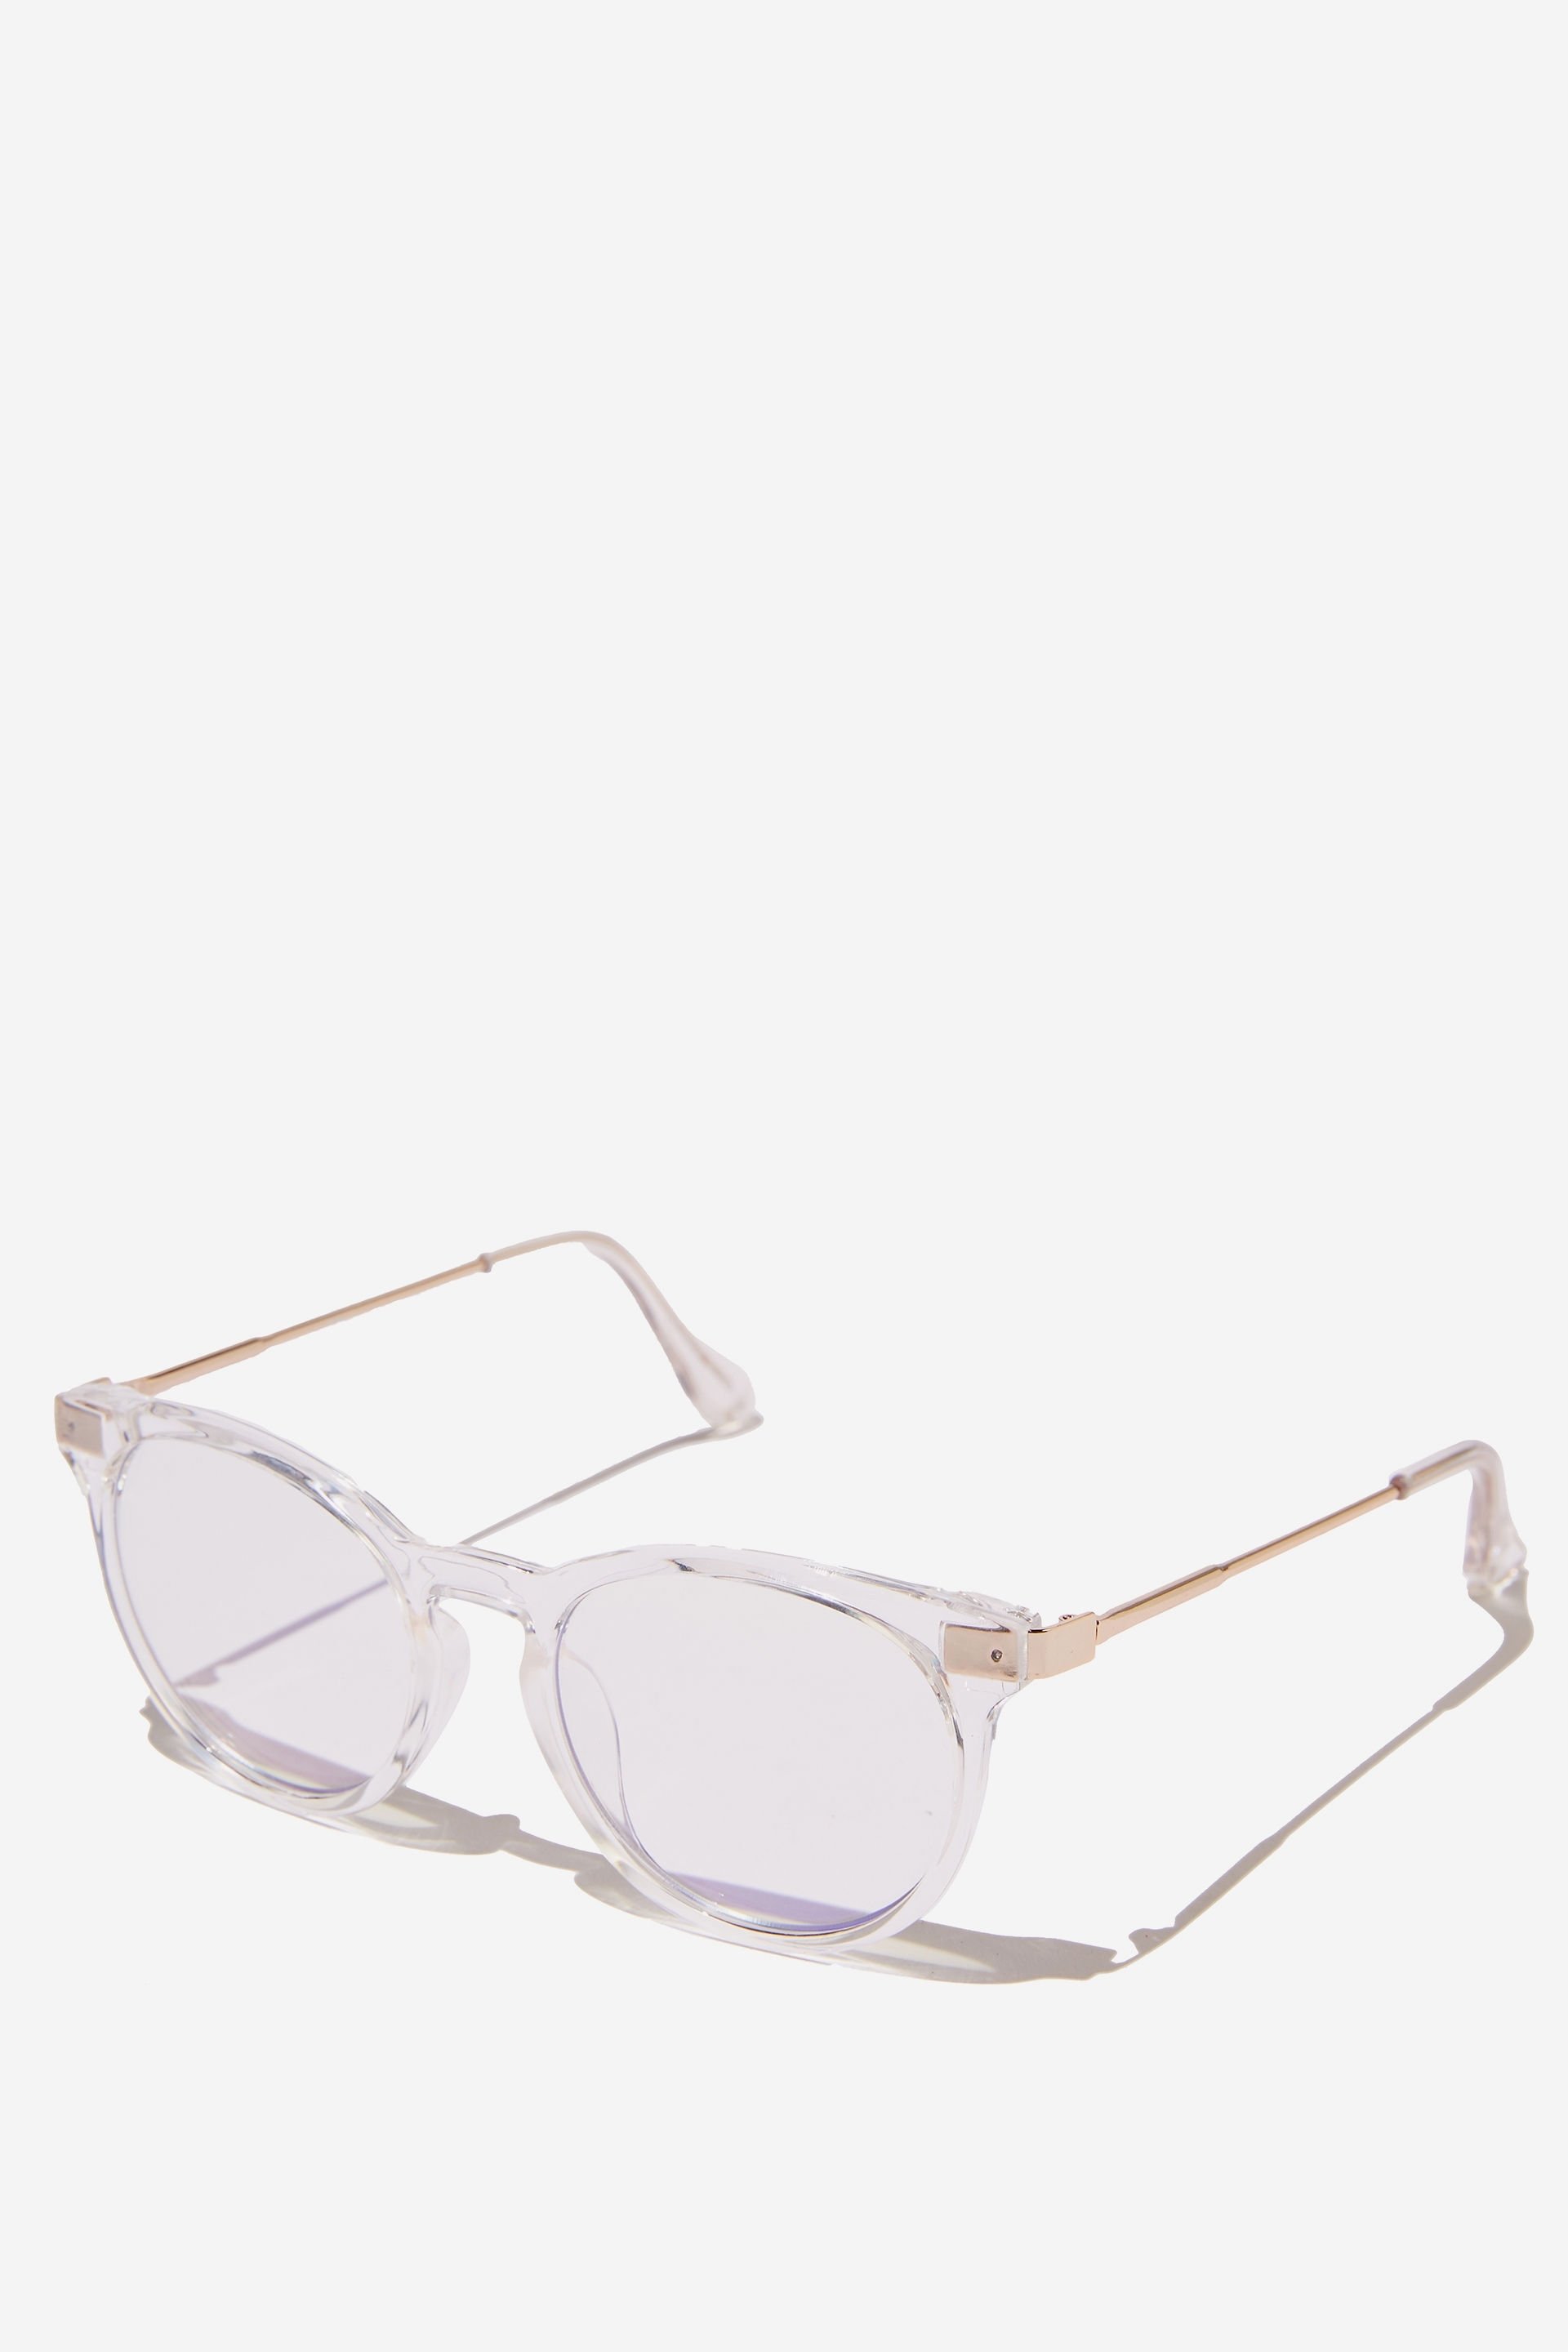 Typo - Remi Blue Light Blocking Glasses - Clear